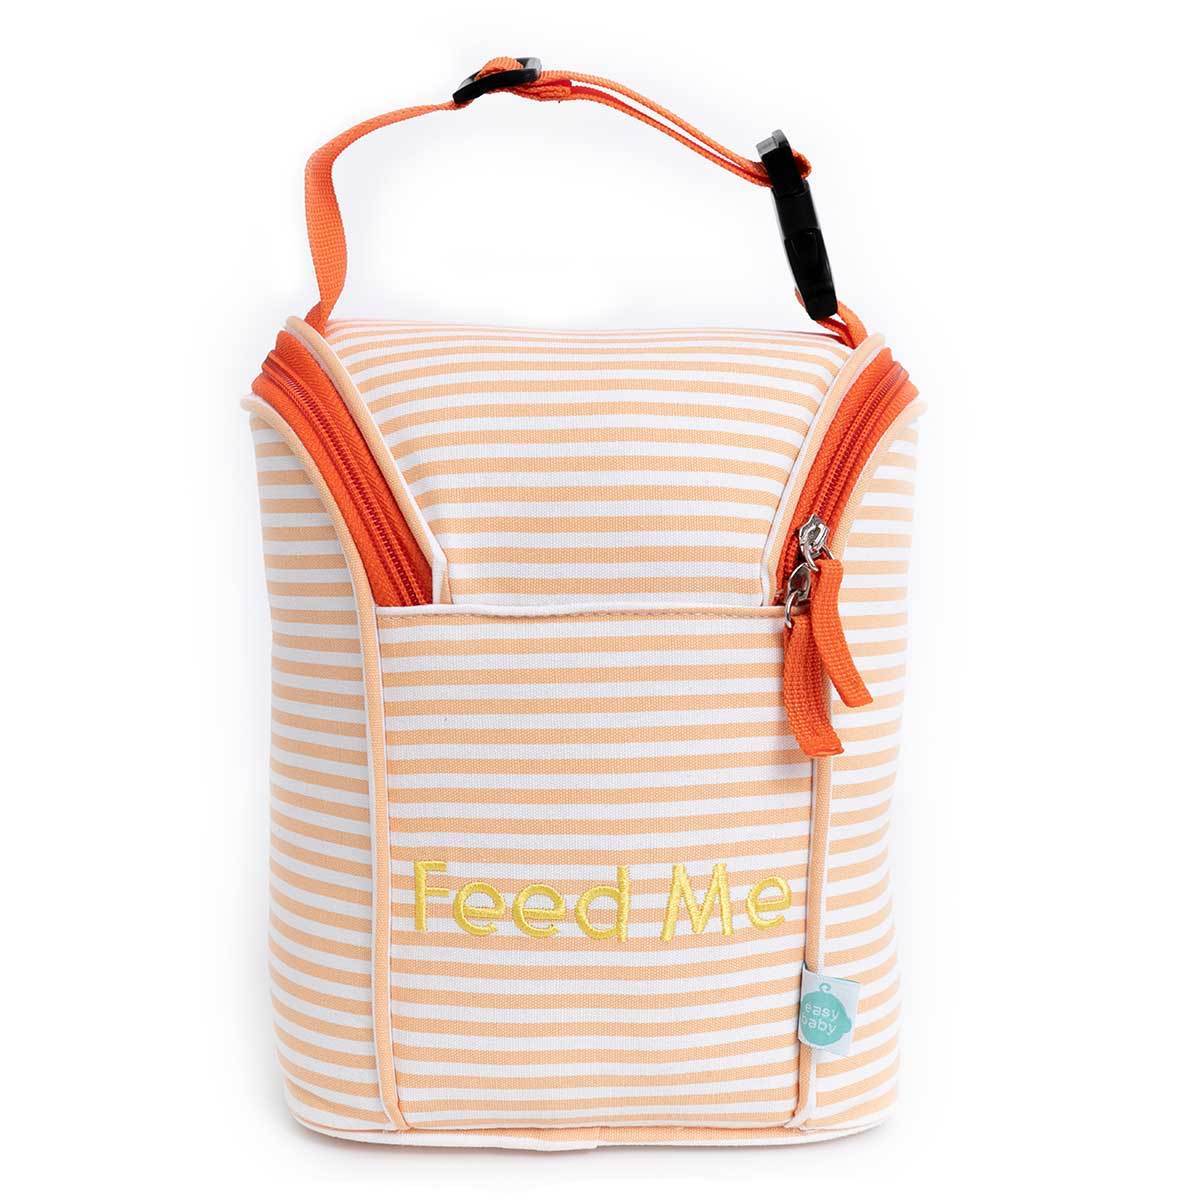 FBA Easy Baby Travelers Organizer Set of 4 Diaper Bags, Laguna Beach Polka Dot